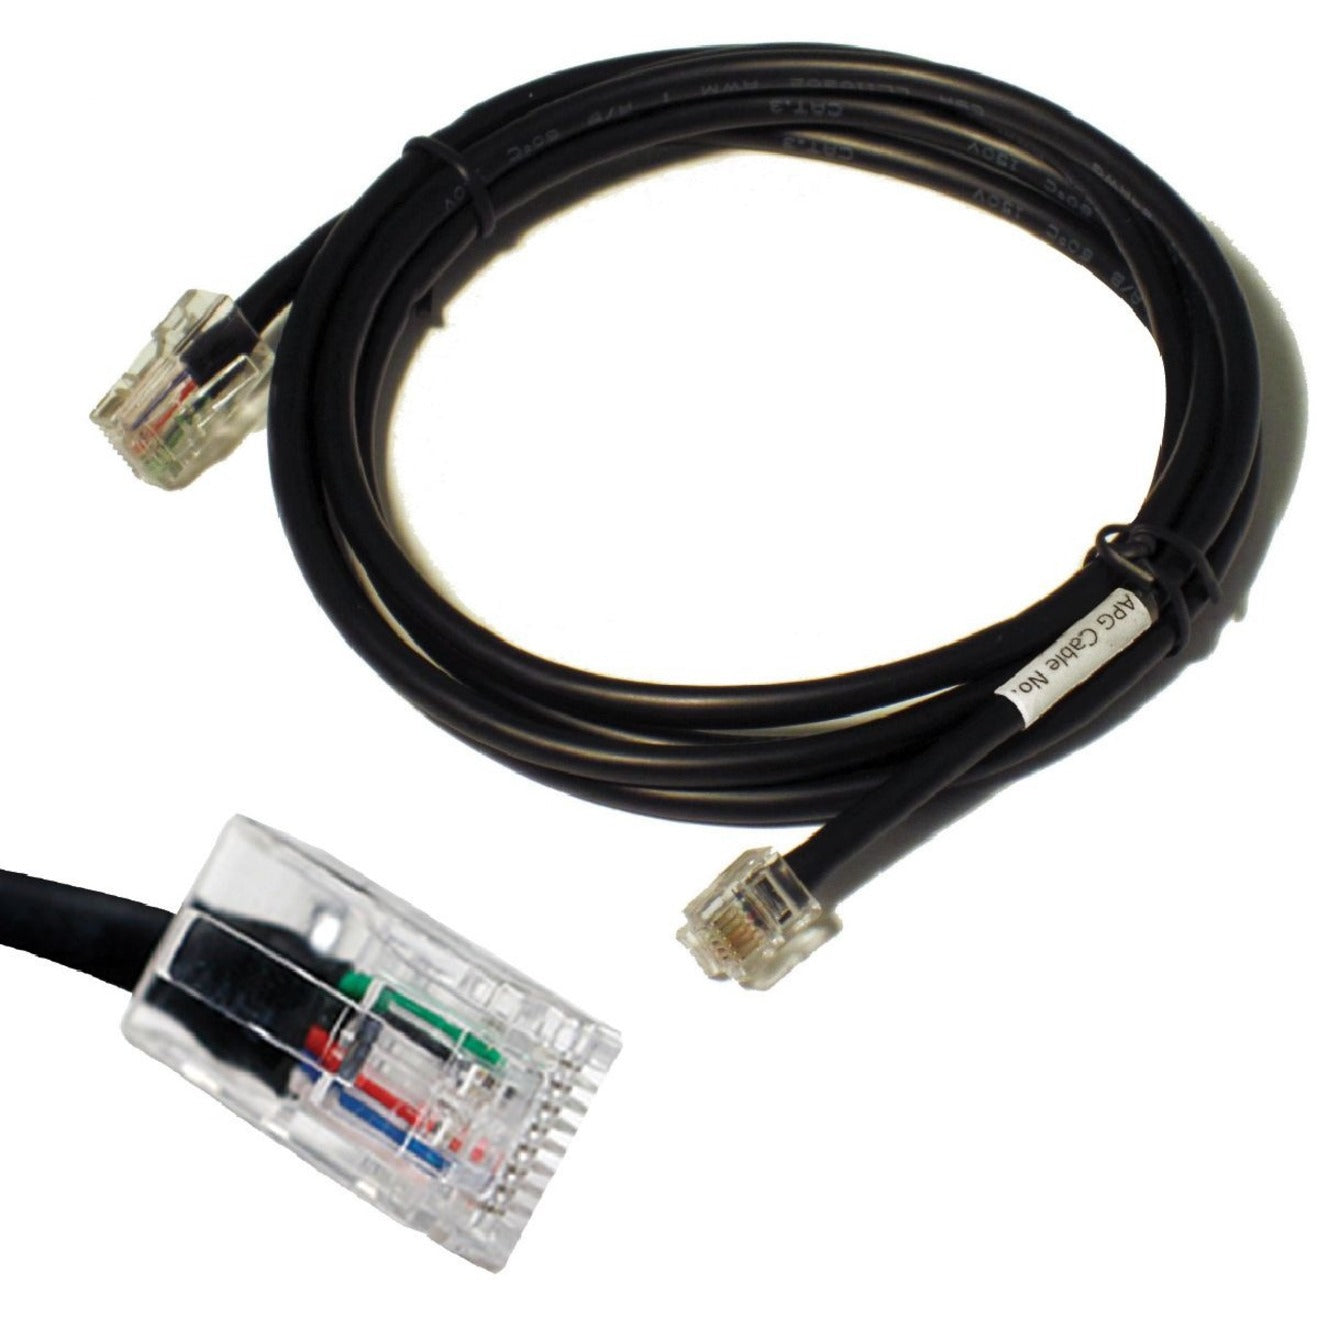 Cable de transferencia de datos MultiPRO CD-101A-10 10 pies para impresoras Epson TM y Star TSP/SP. Marca: Apg.